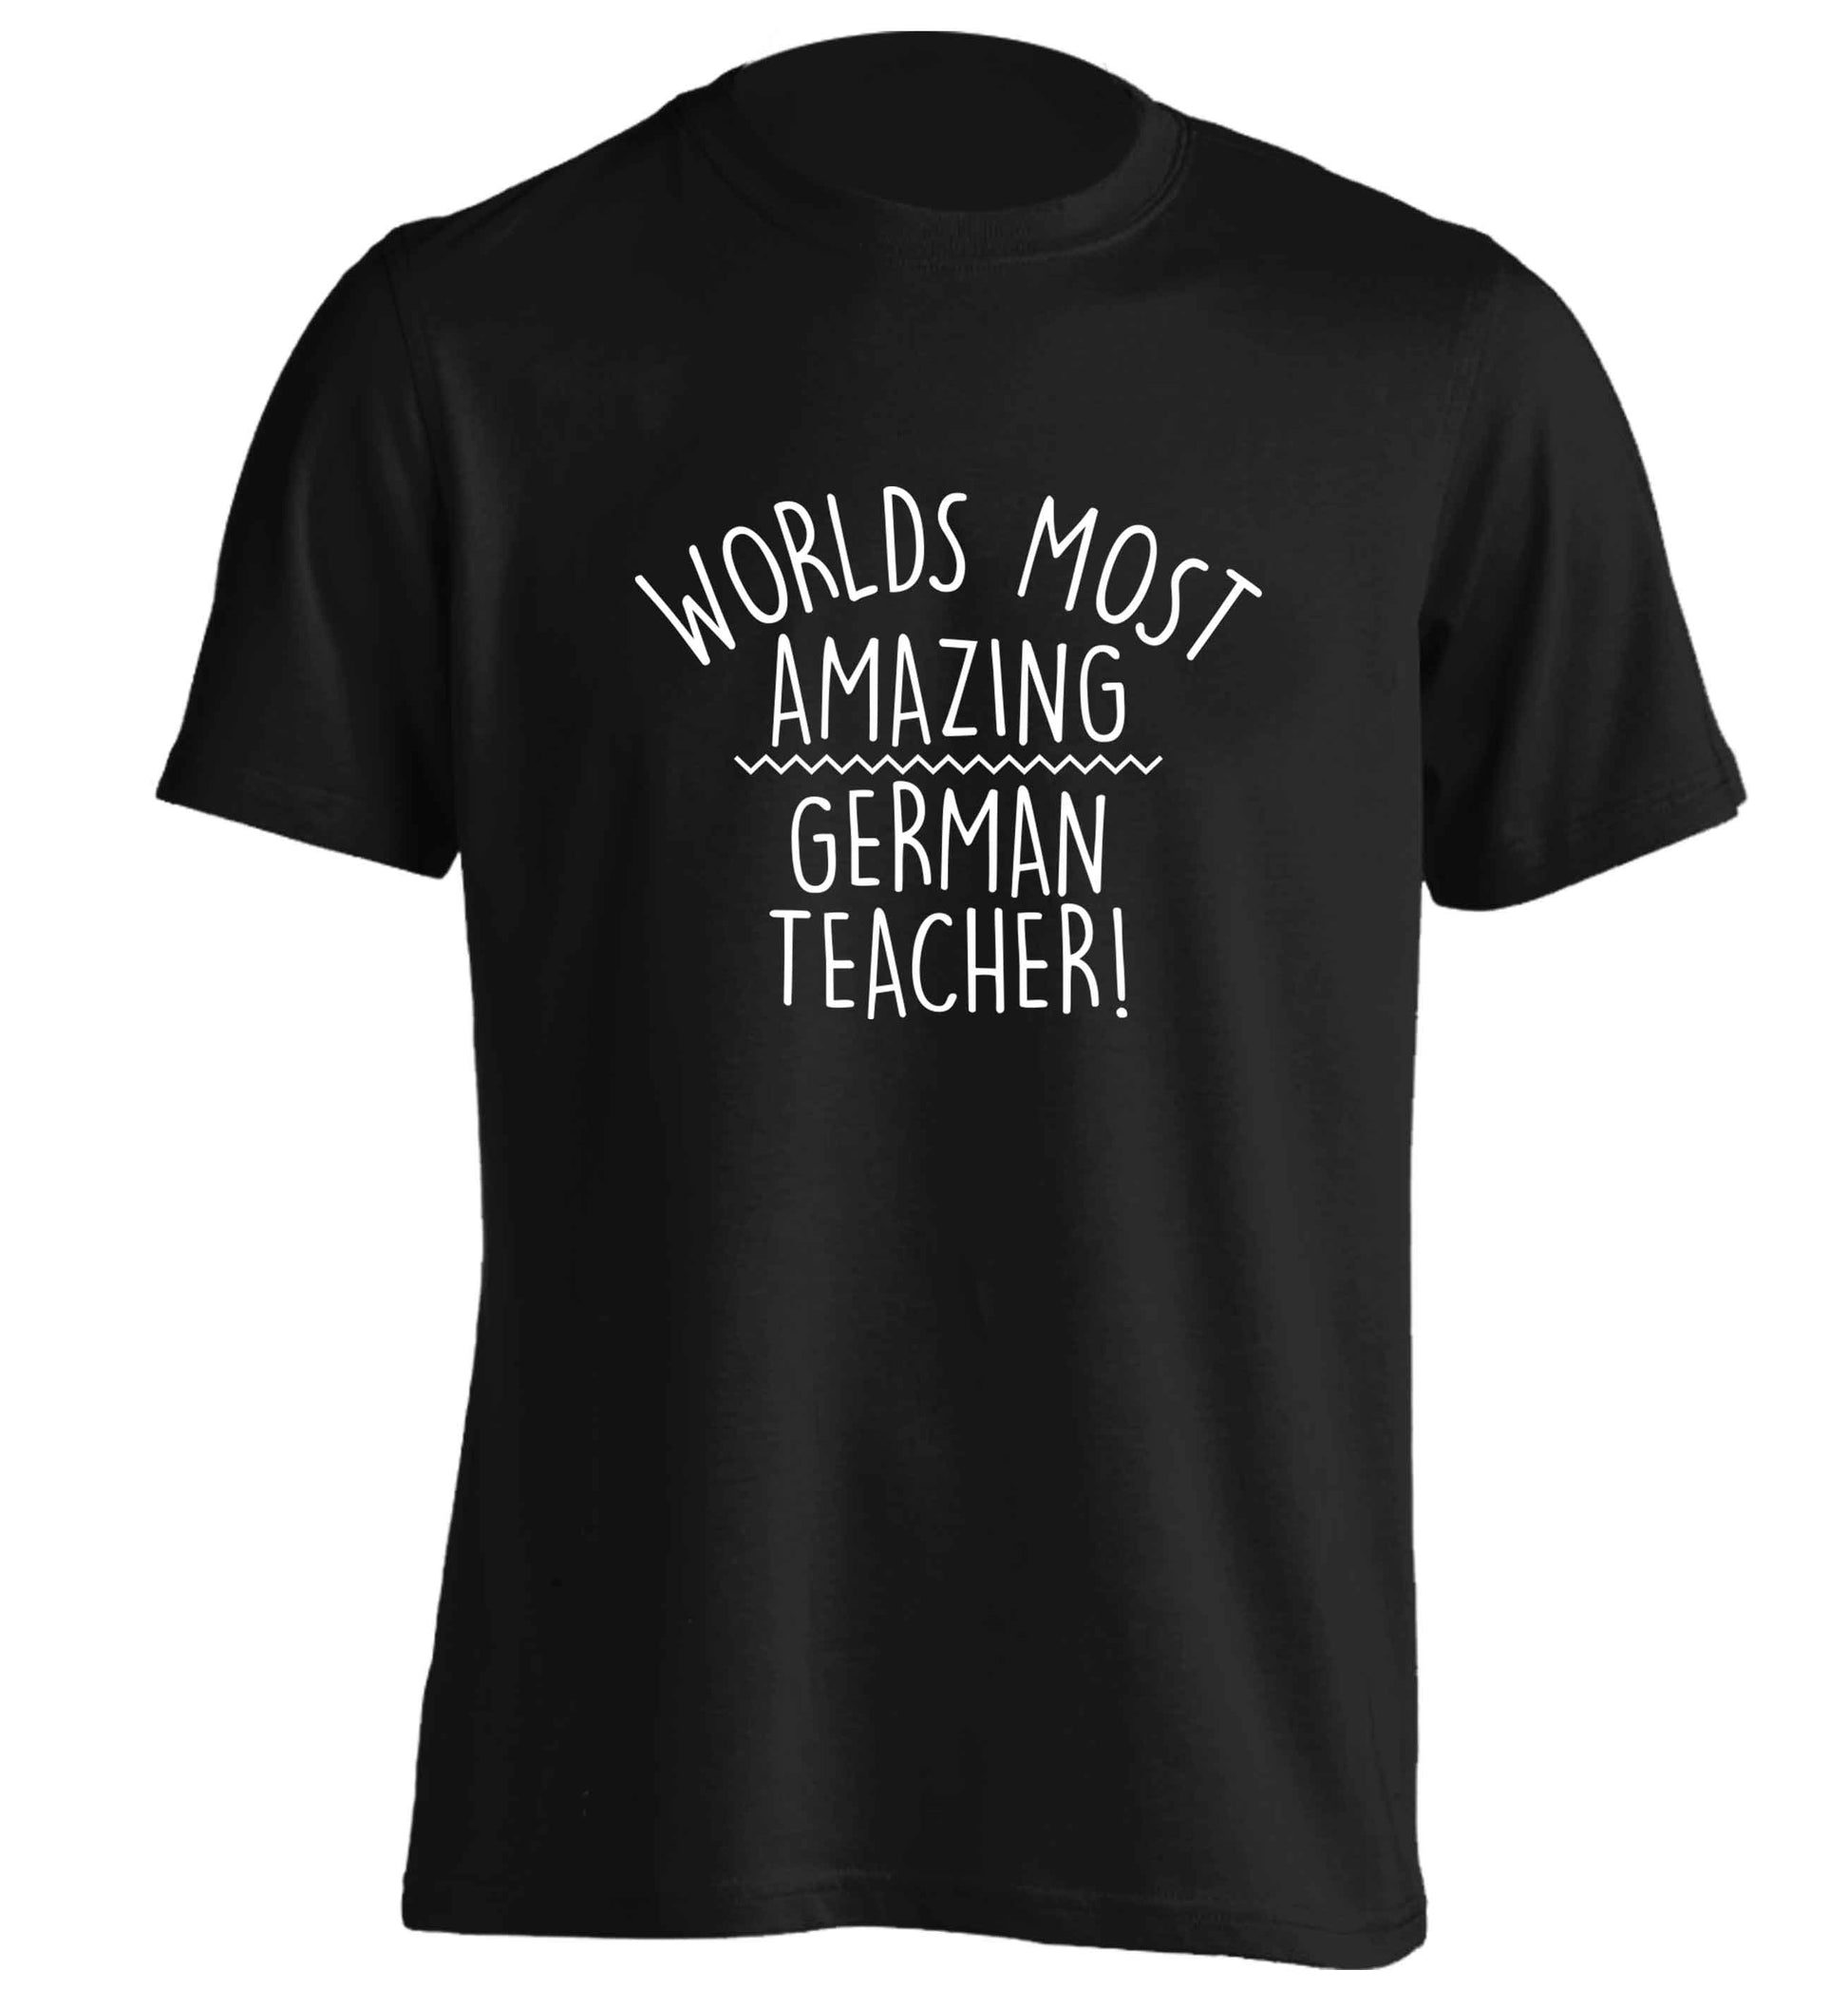 Worlds most amazing German teacher adults unisex black Tshirt 2XL